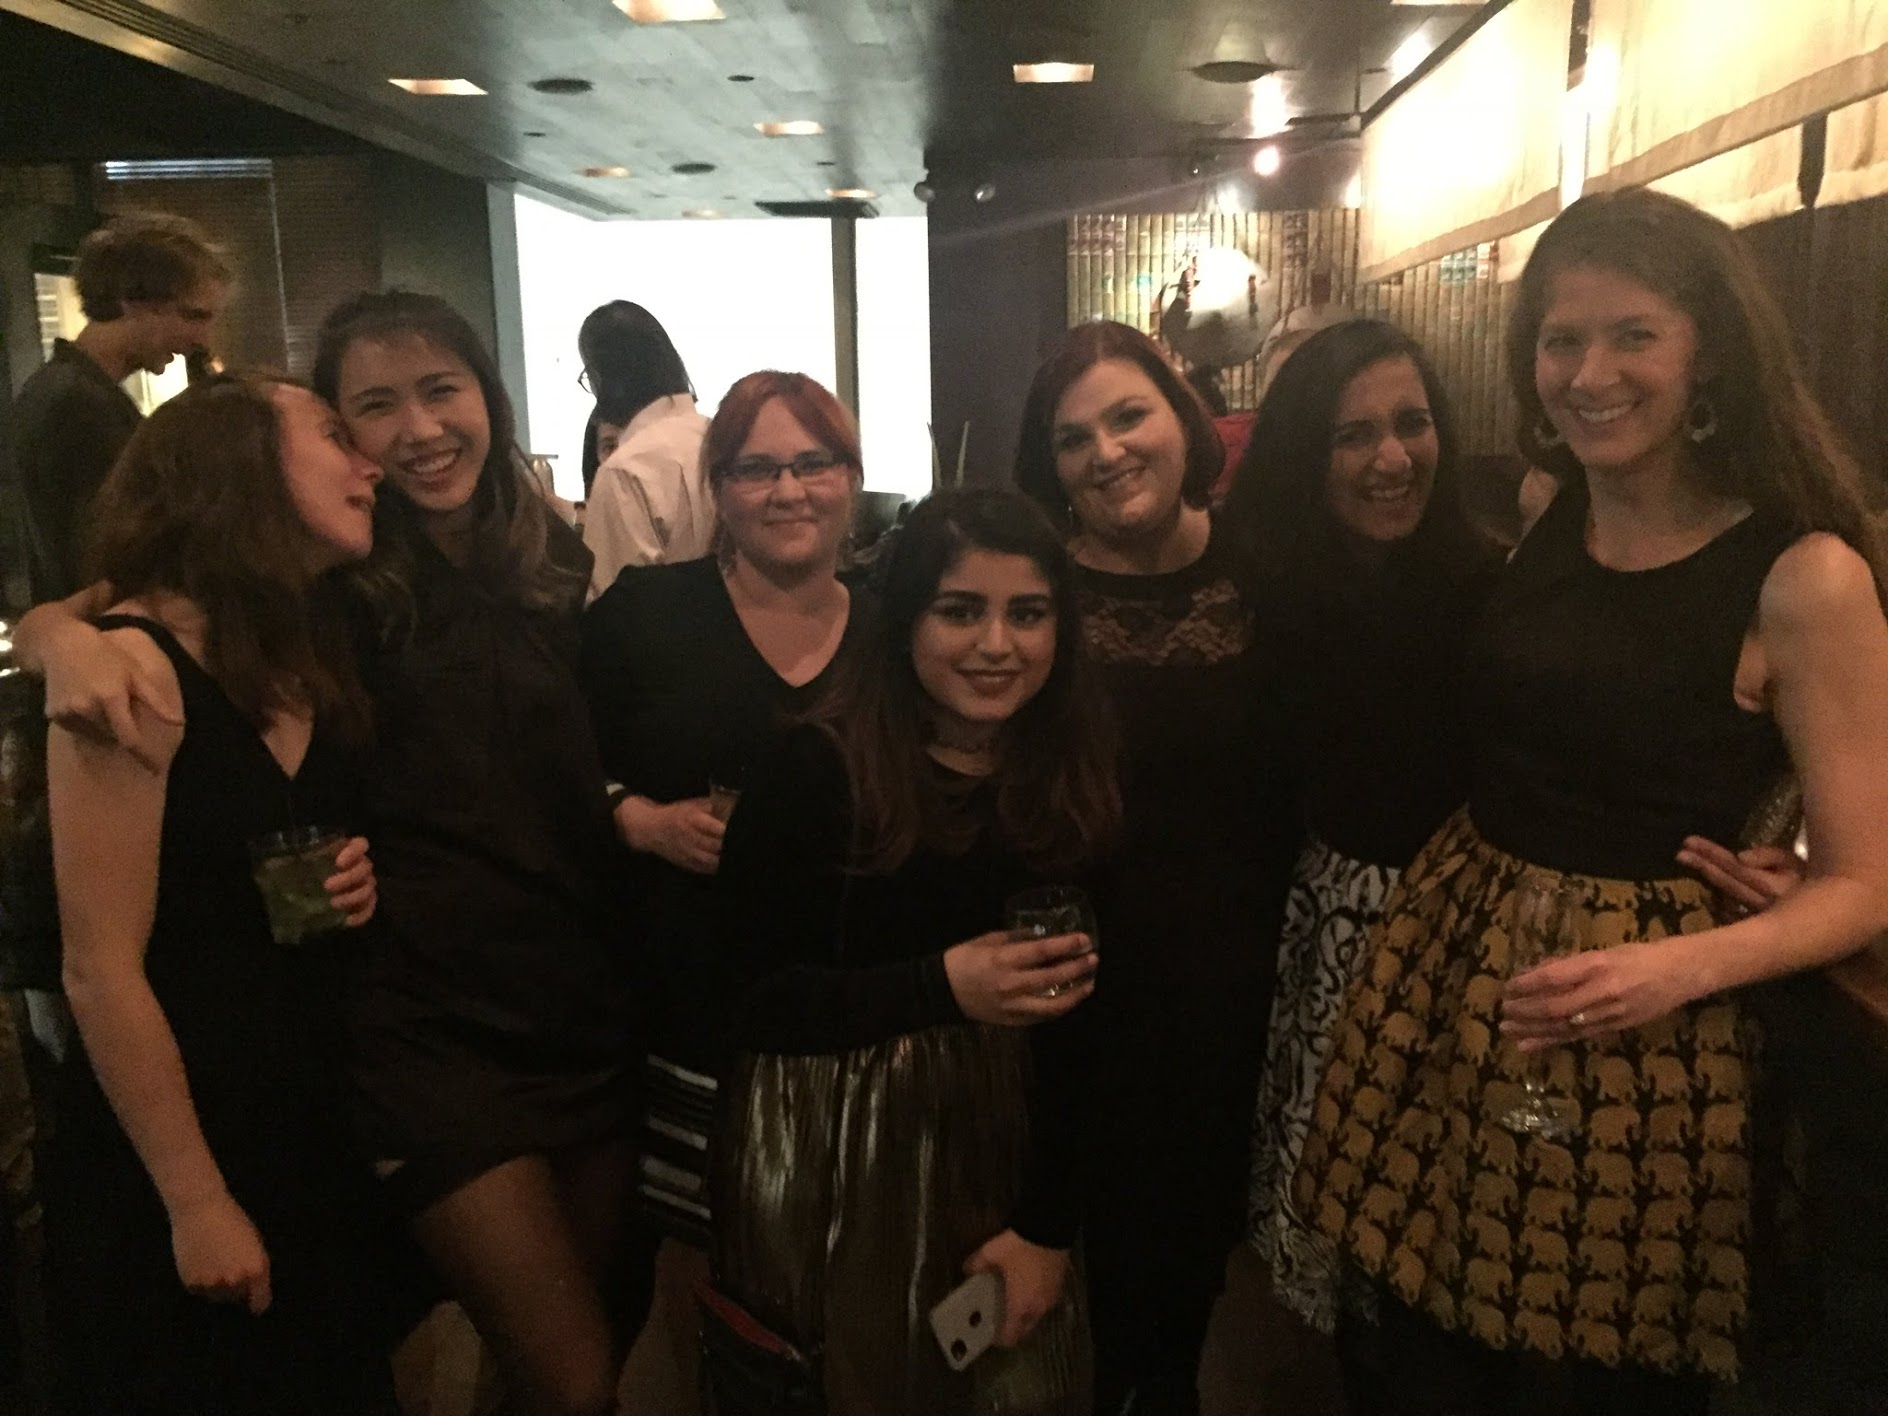  Feeling the holiday cheer  (left to right) Tanya Schild, Vivien Low, Didem Ilter, Tasnia Islam, Ana Gomes, Kripa Ganesh, Bethany Shaffer  December 2017 